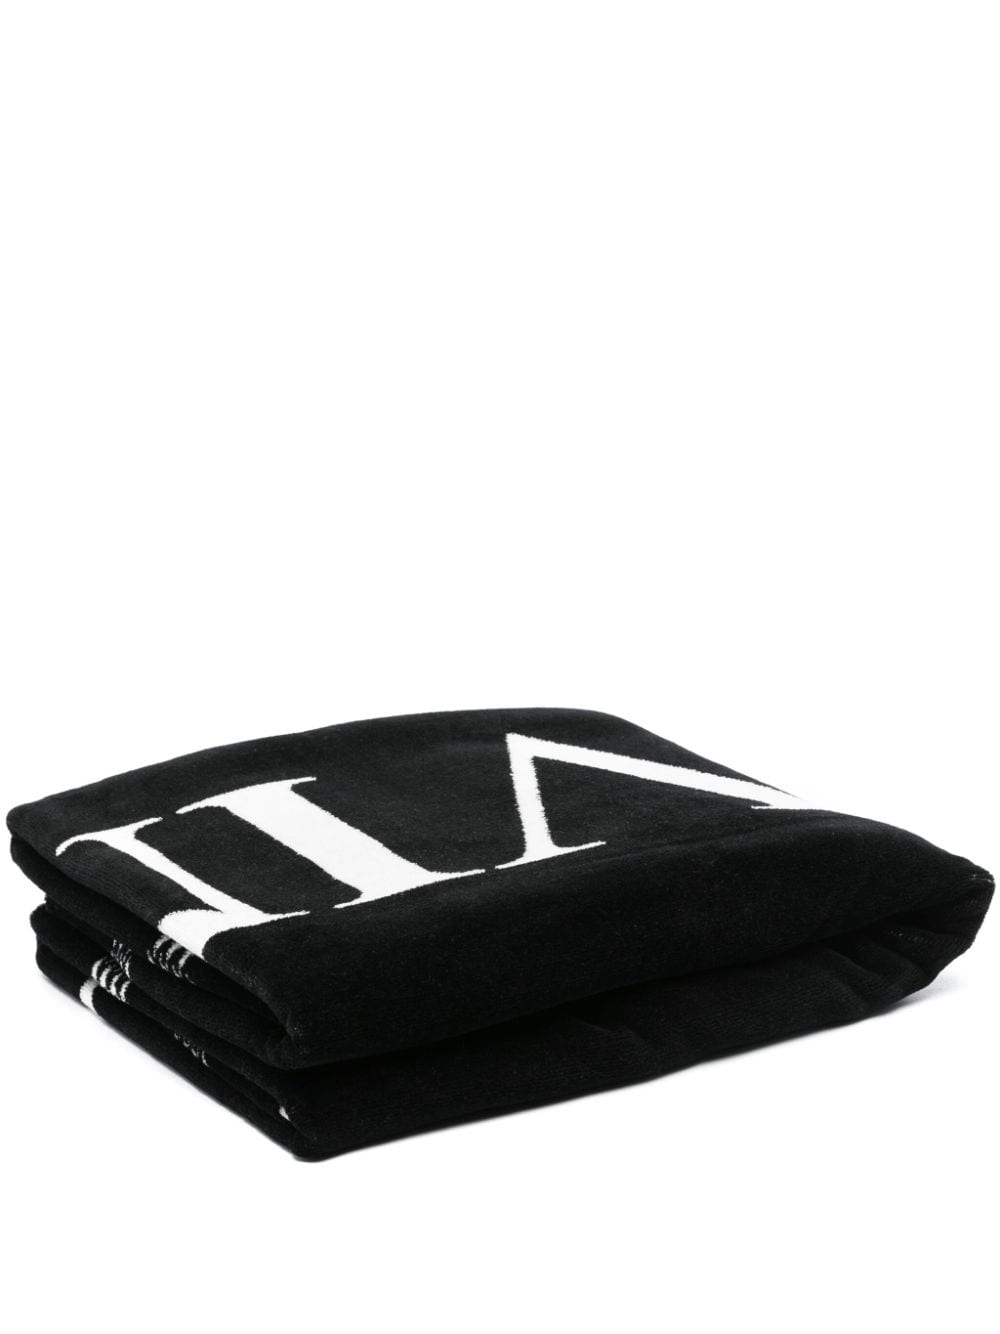 C.P. Company logo-jacquard beach towel - Black